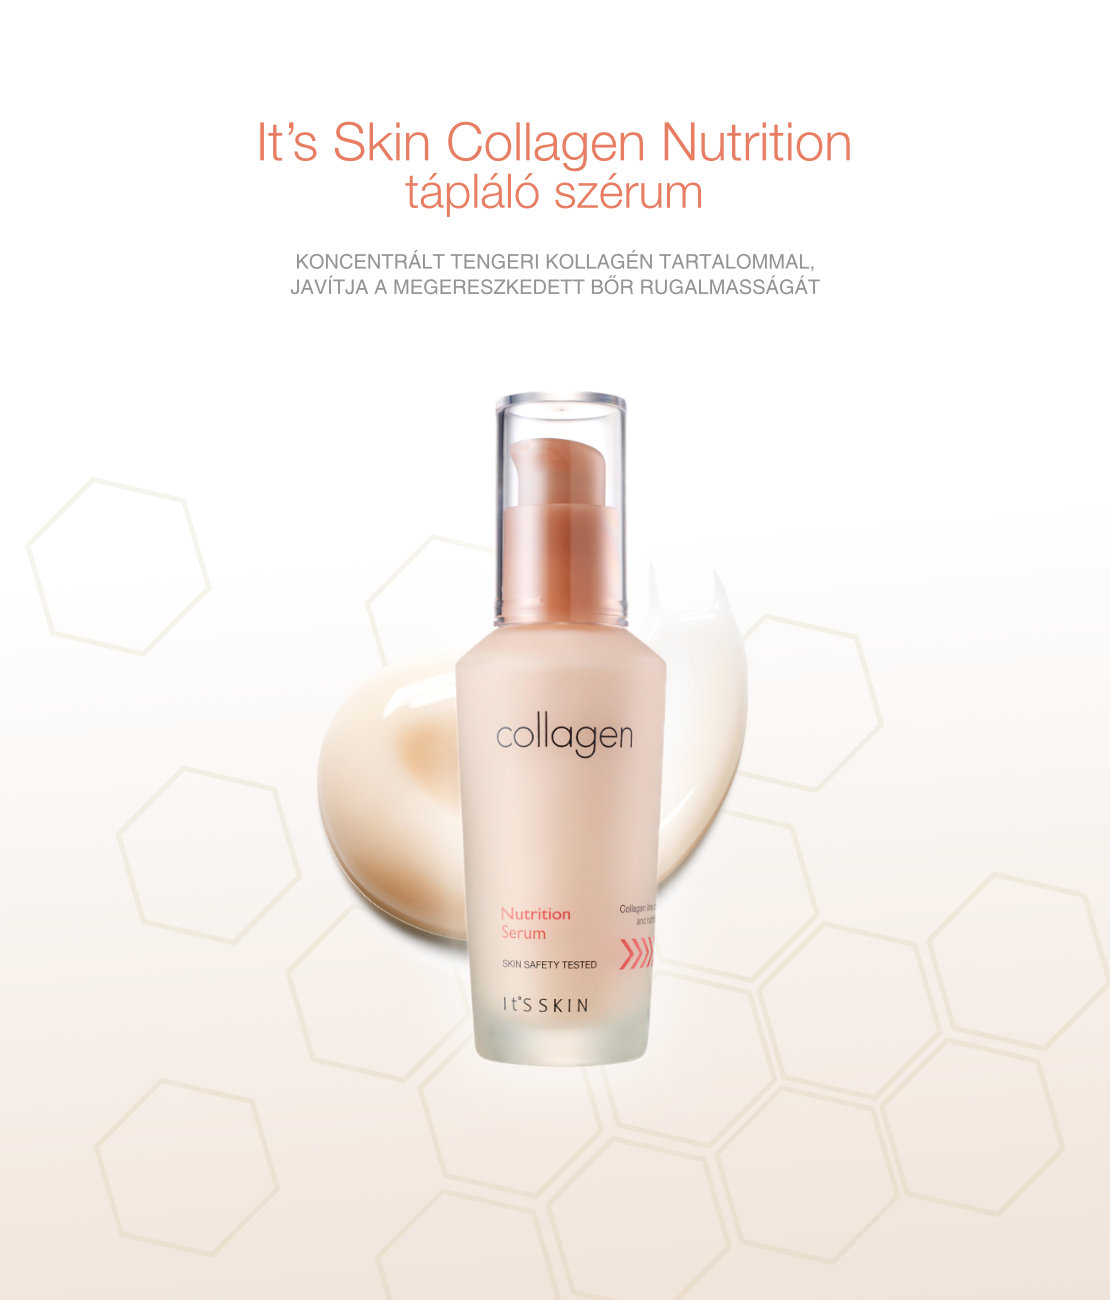 Its-skin-collagen-nutrition-taplalo-szerum-des-1